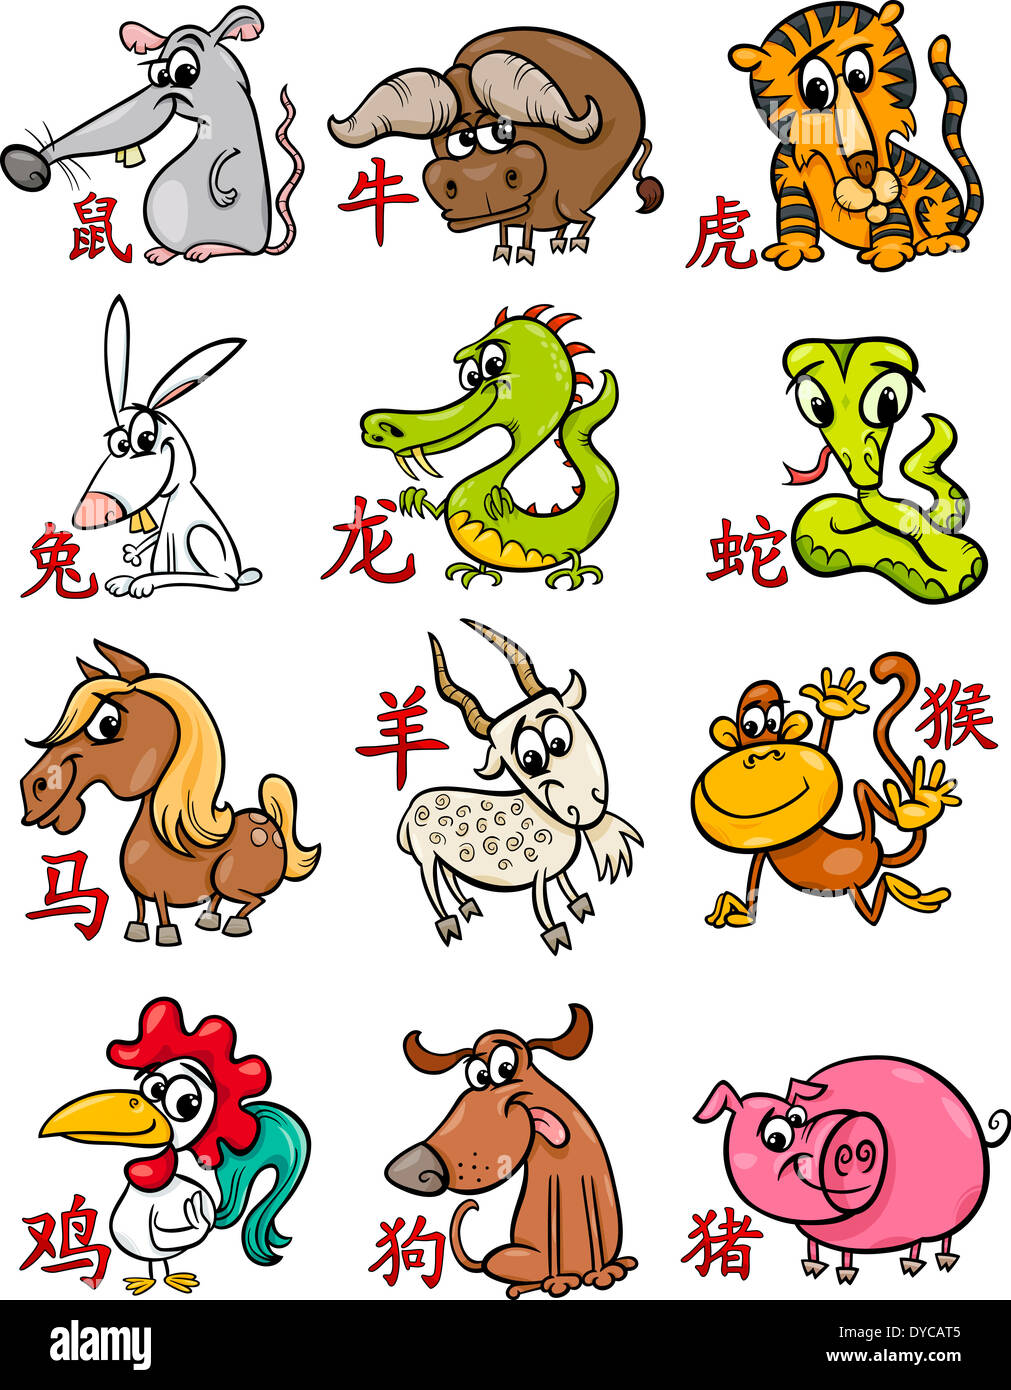 Cartoon Illustration of All Chinese Zodiac Horoscope Signs Set Stock Photo  - Alamy